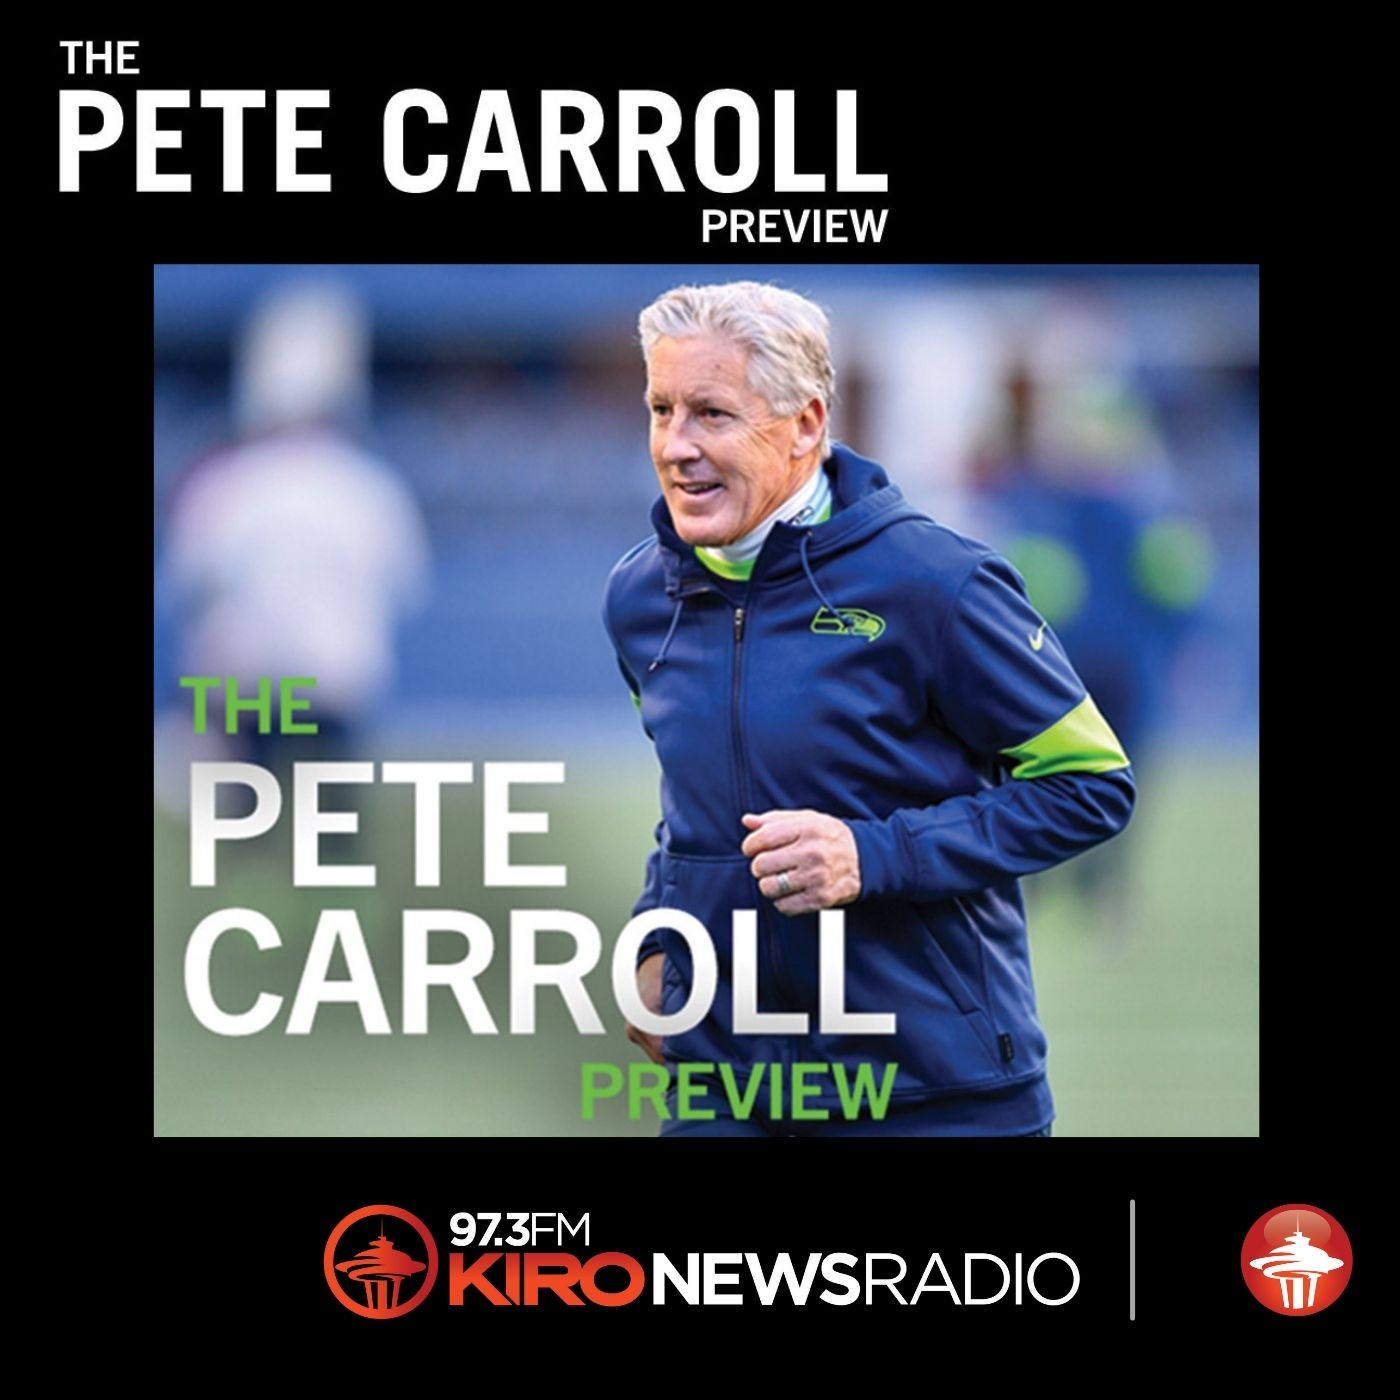 The Pete Carroll Preview on KIRO Newsradio